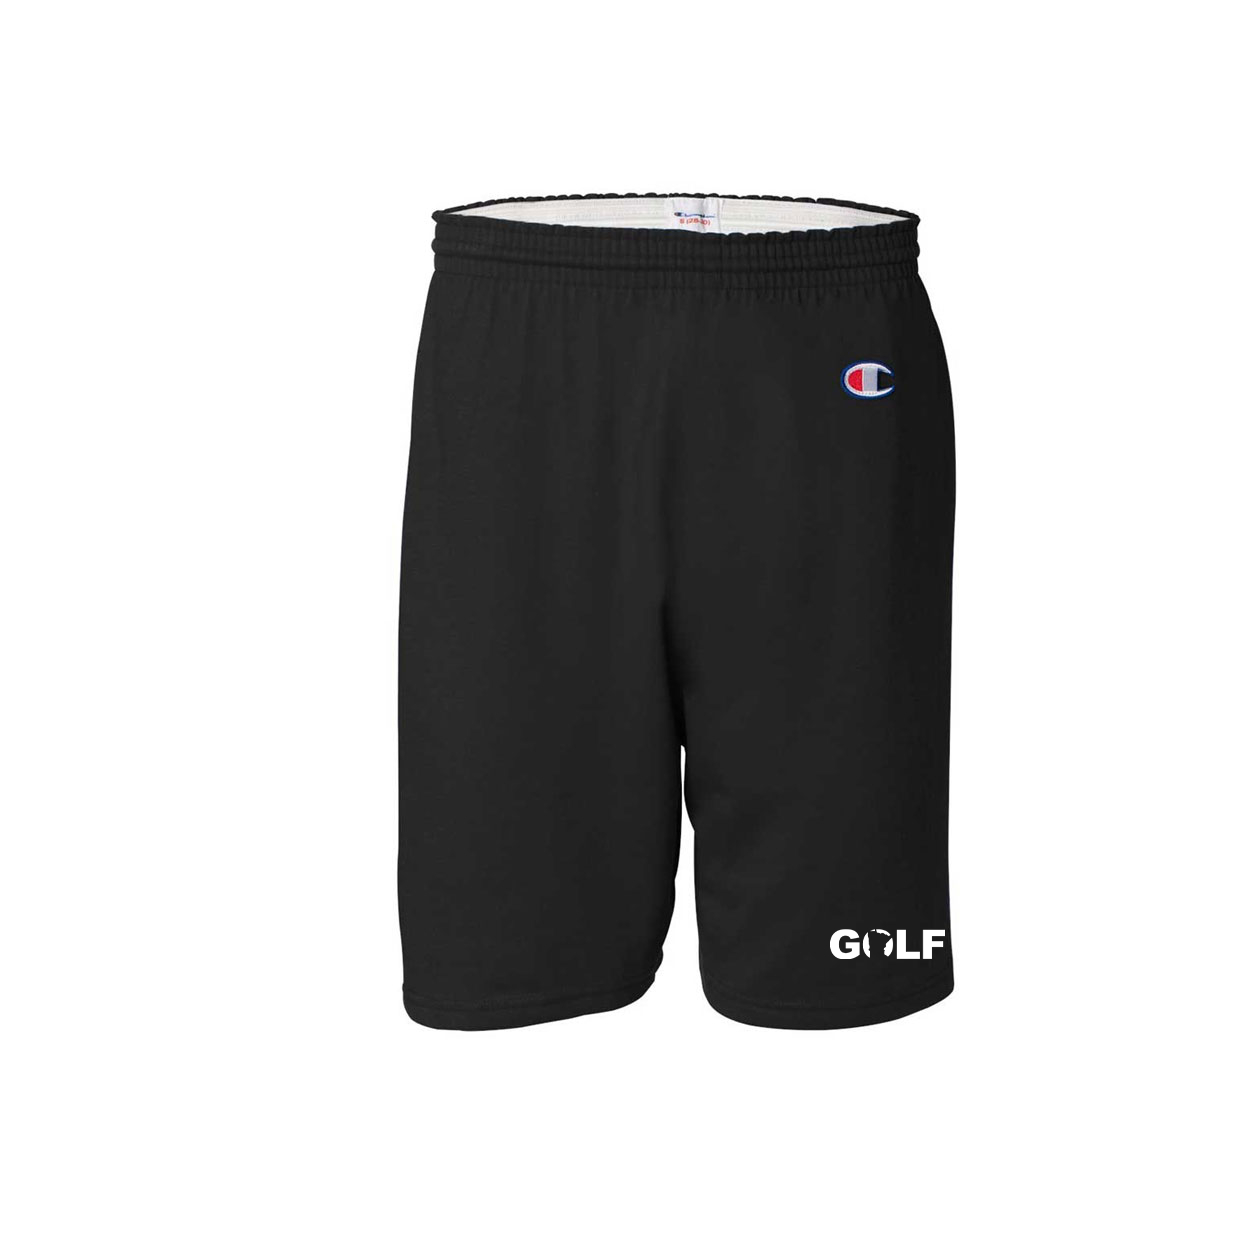 Golf Minnesota Classic Men's Unisex Gym Shorts Black with Pockets Black (White Logo)